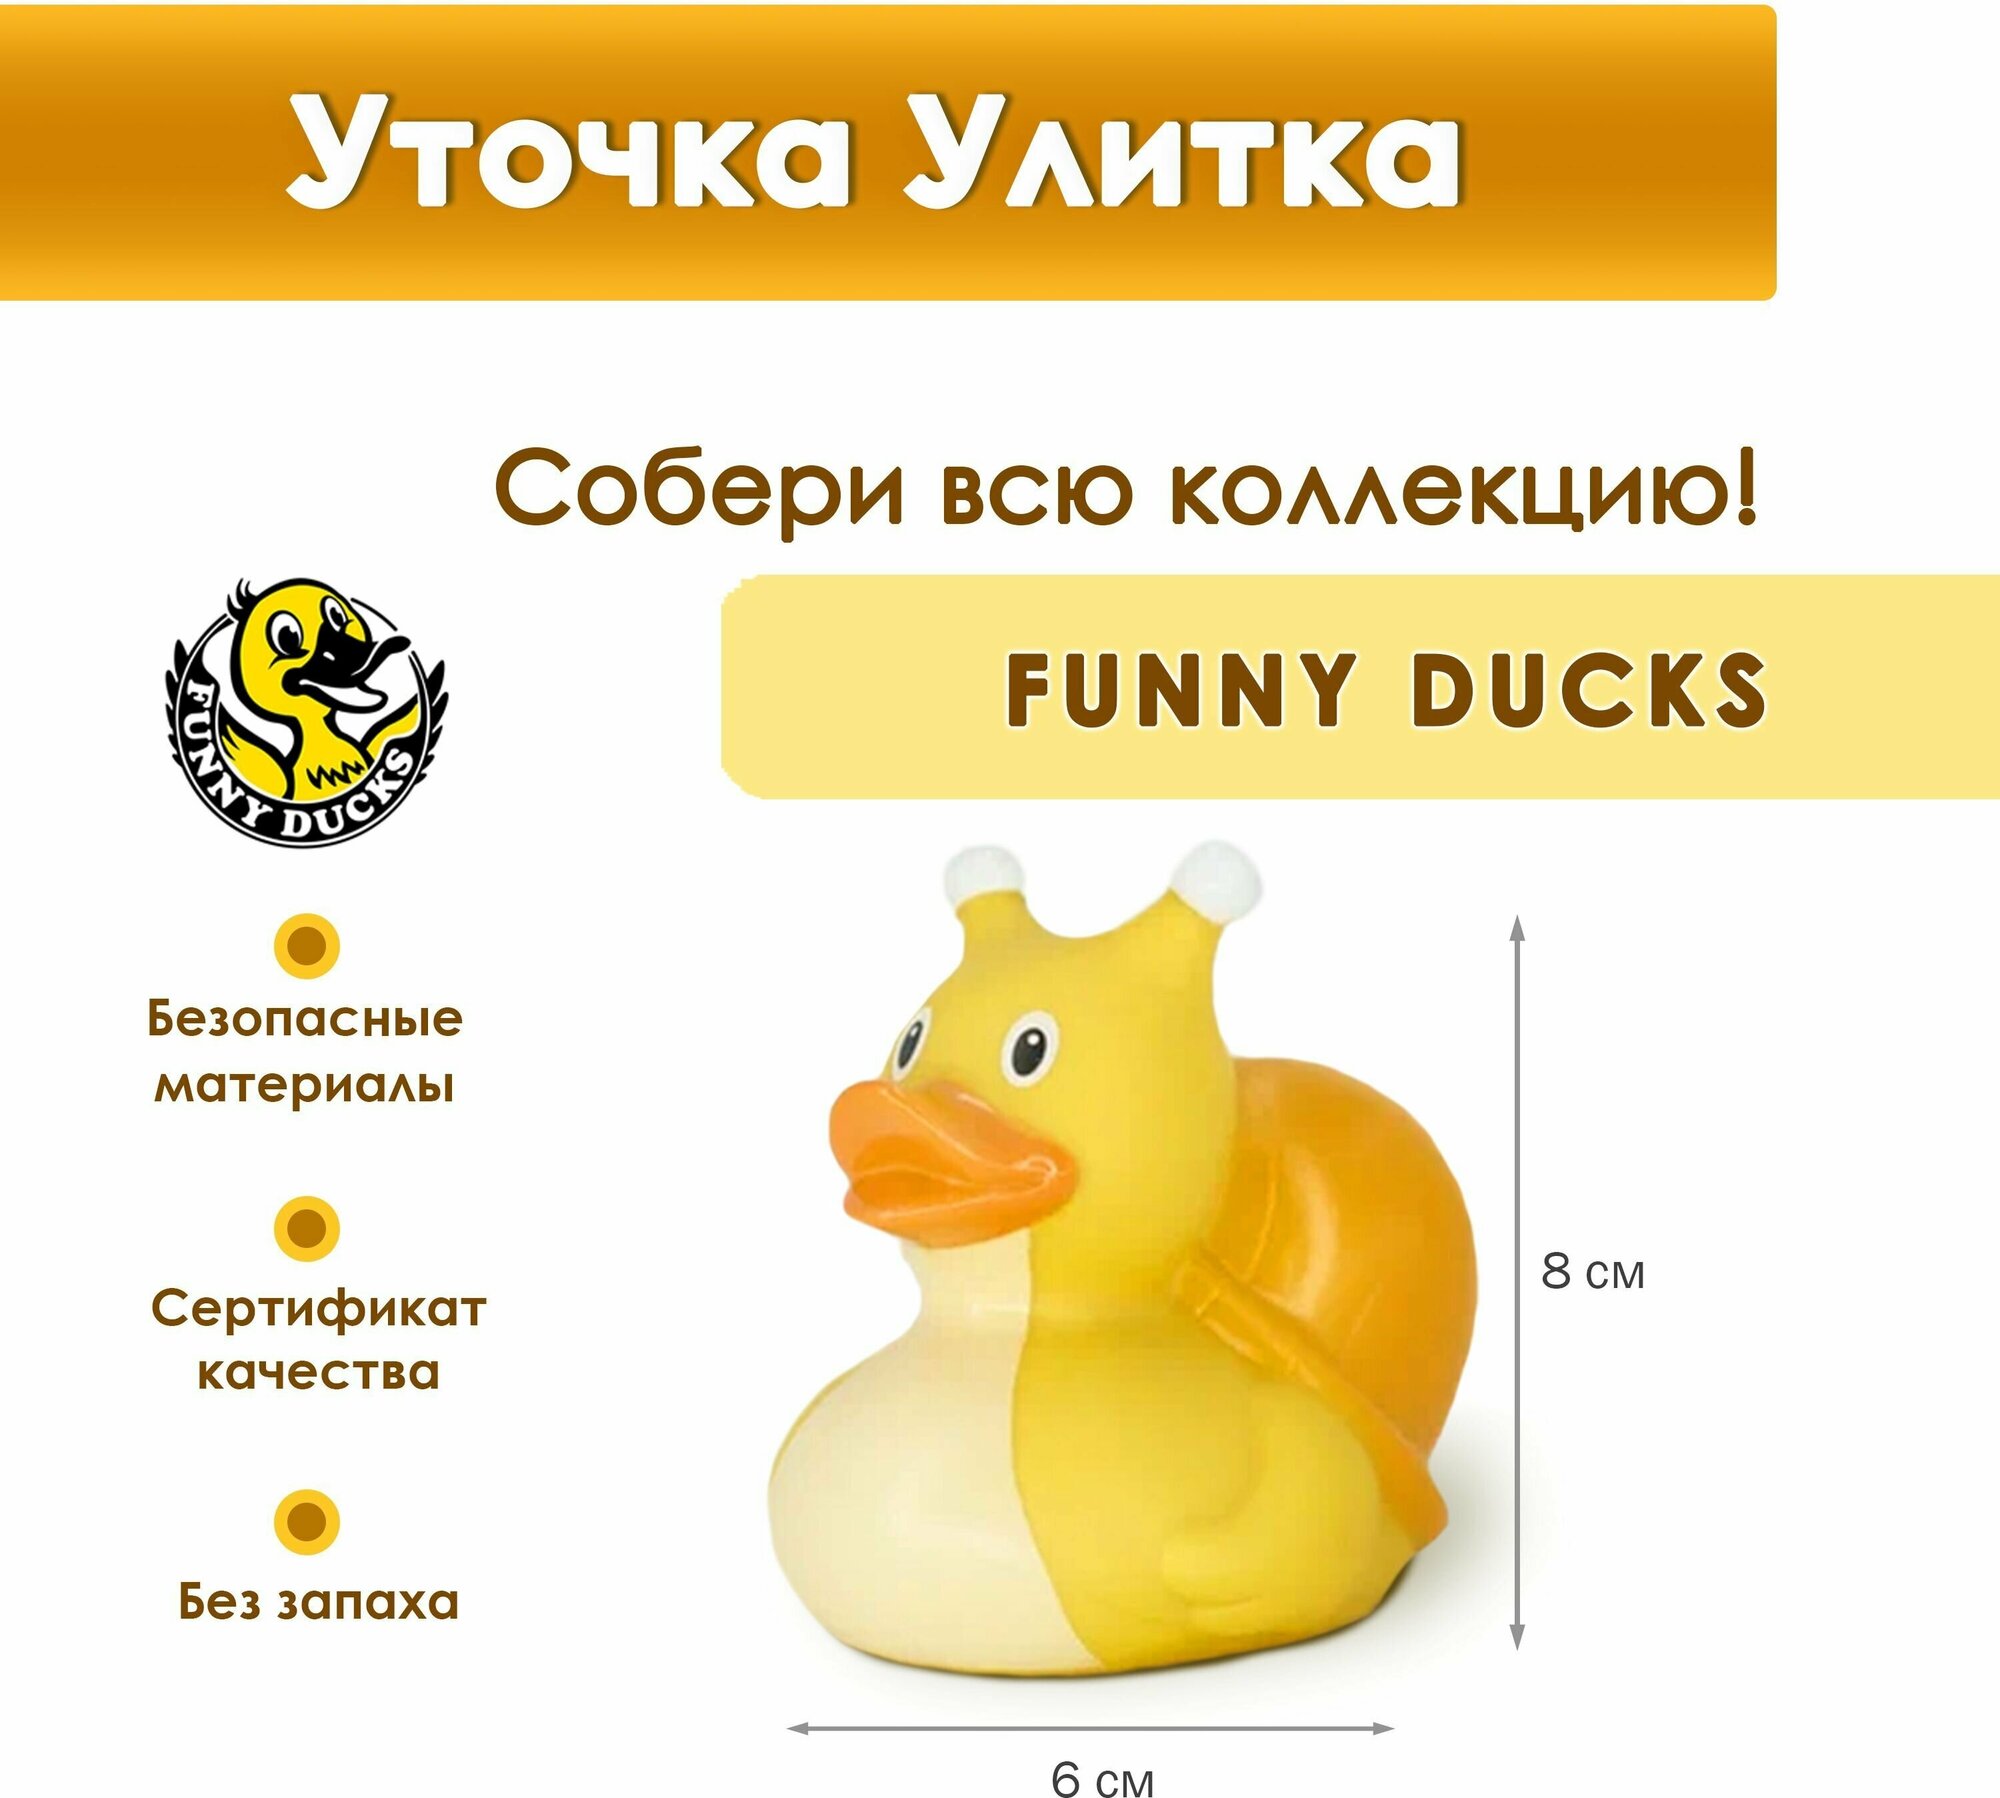 Funny Ducks "Улитка" - фото №2